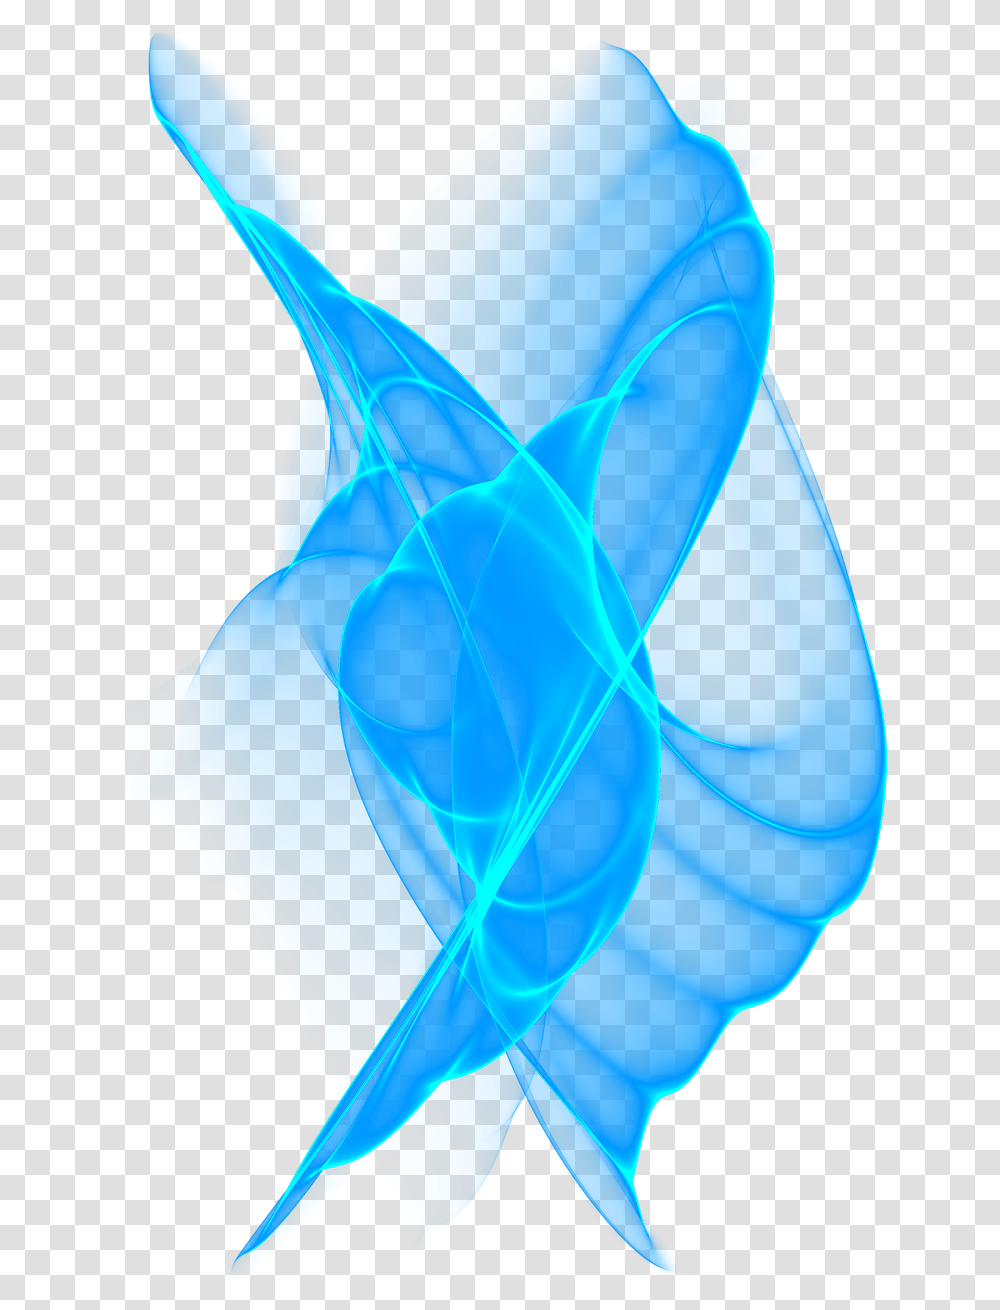 Space Background Clipart Atlantic Blue Marlin, Ornament, Pattern, Fractal Transparent Png